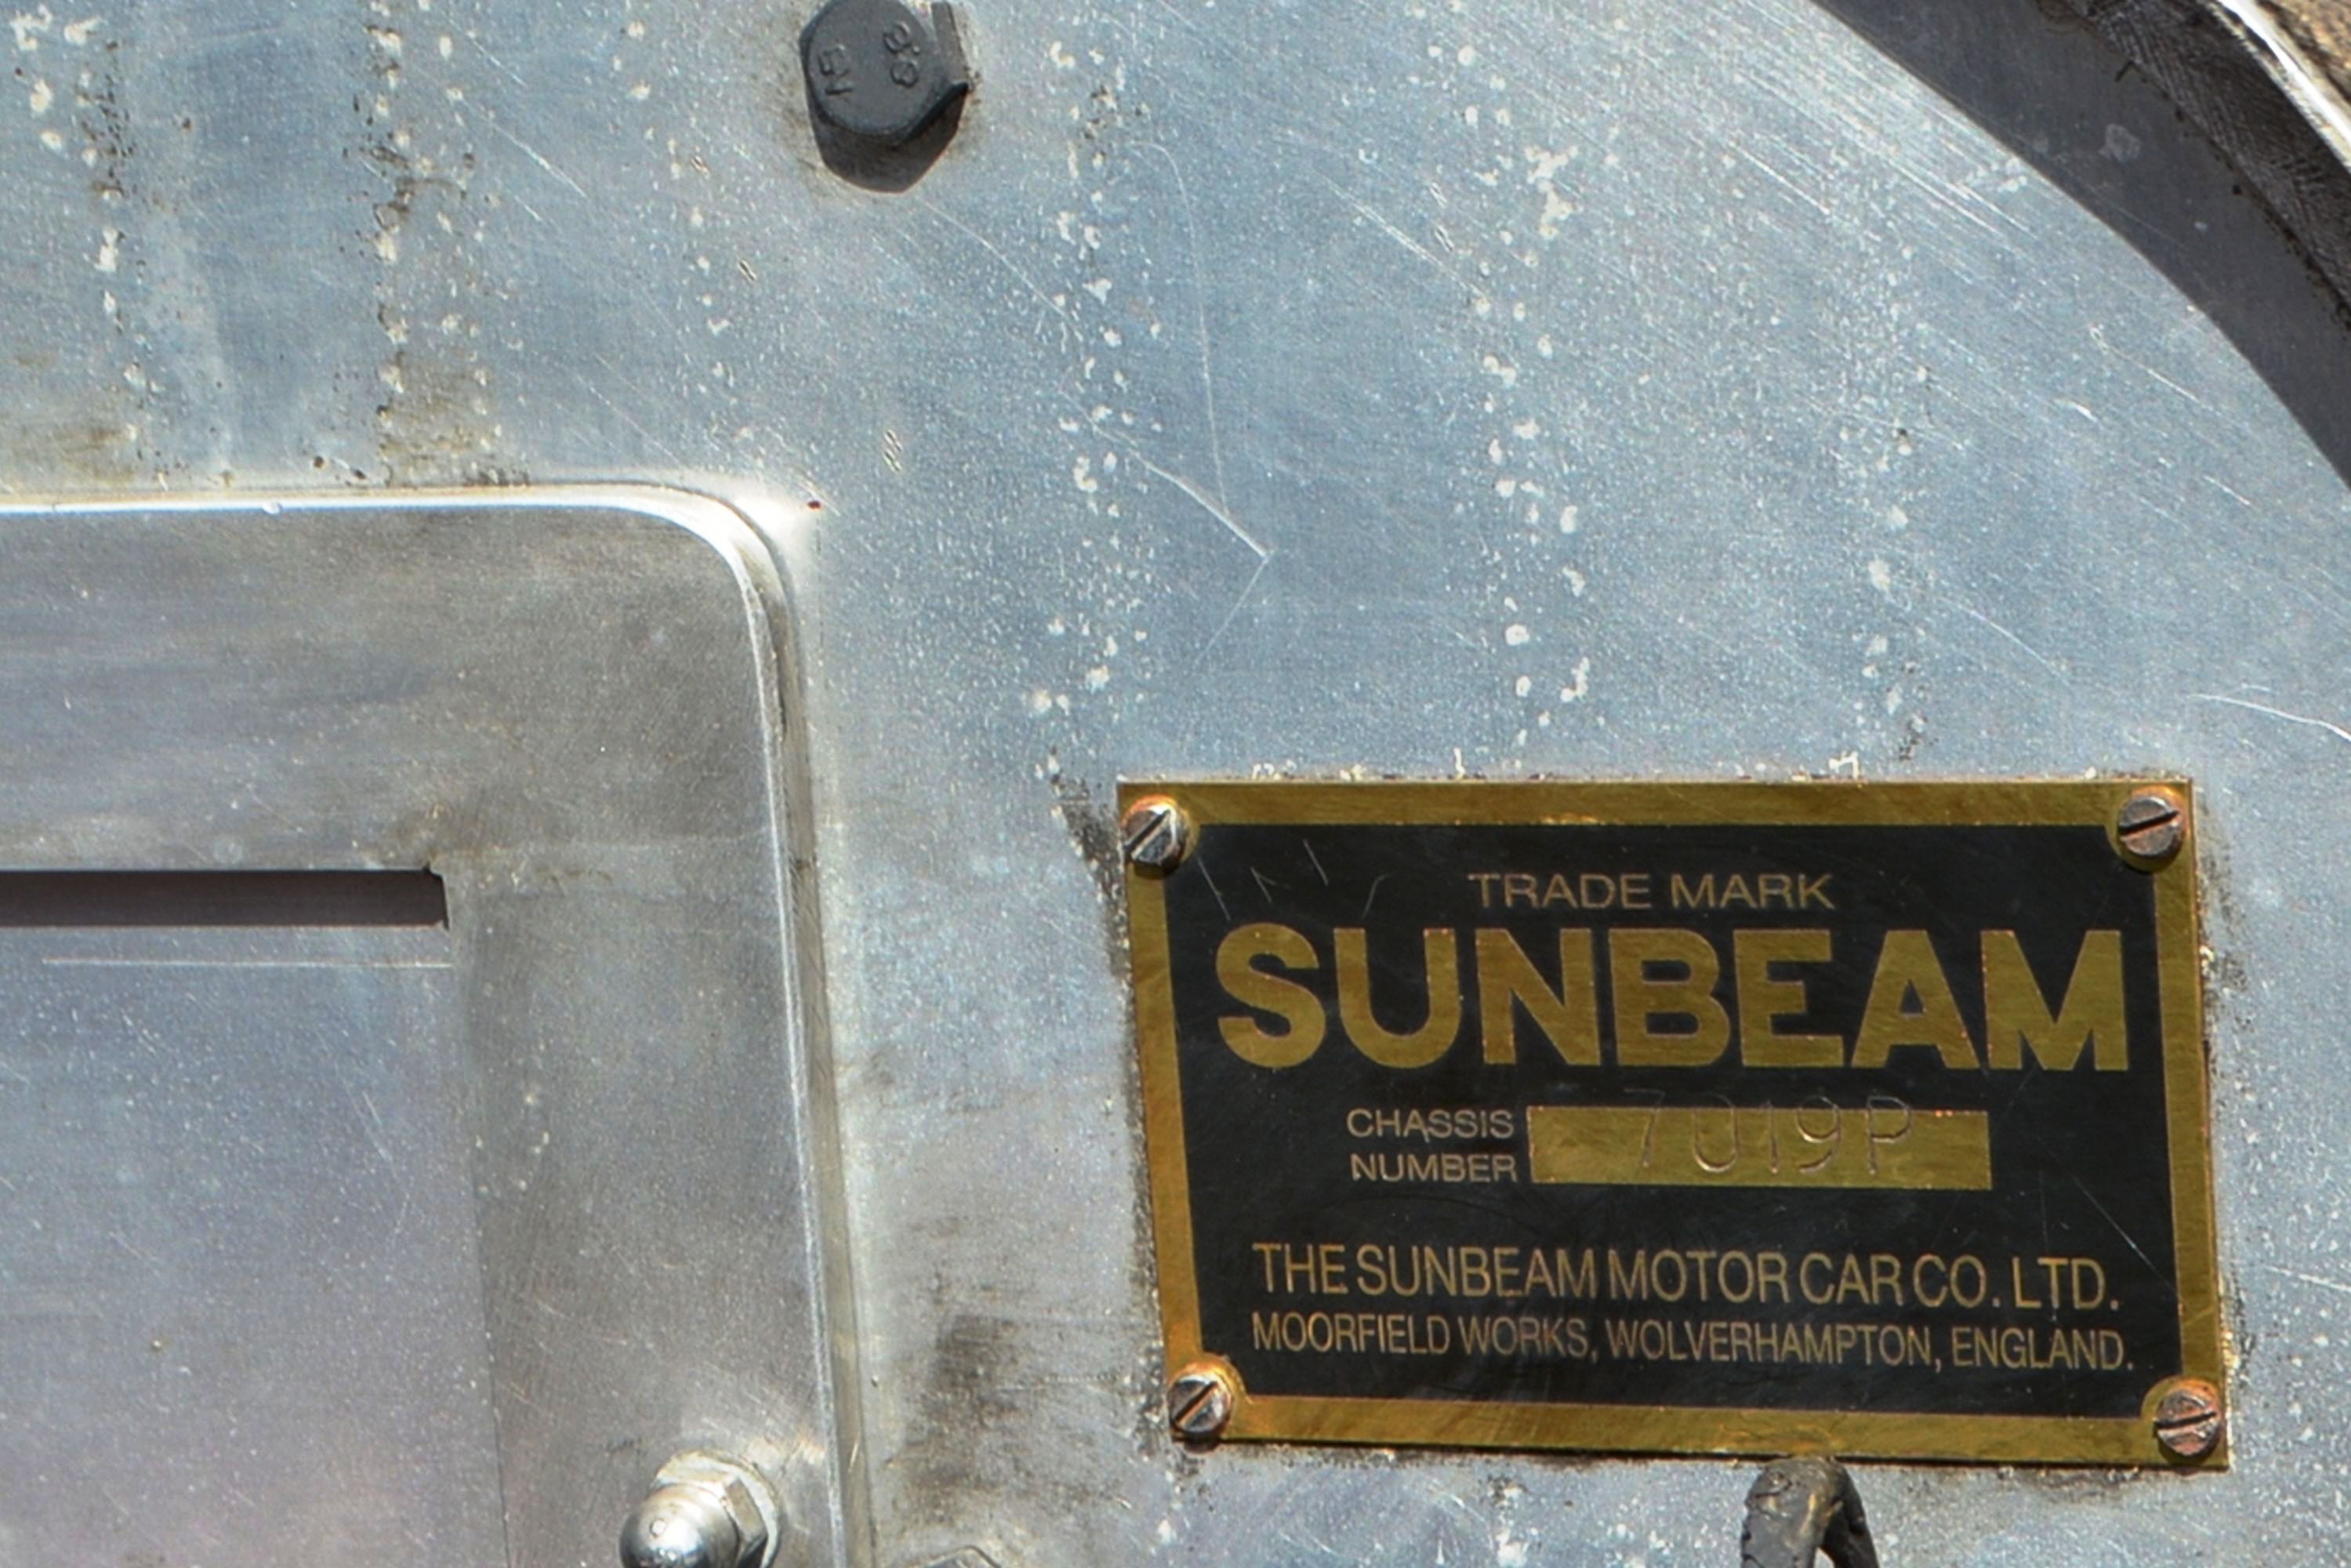 Sunbeam 20 Drophead Coupe